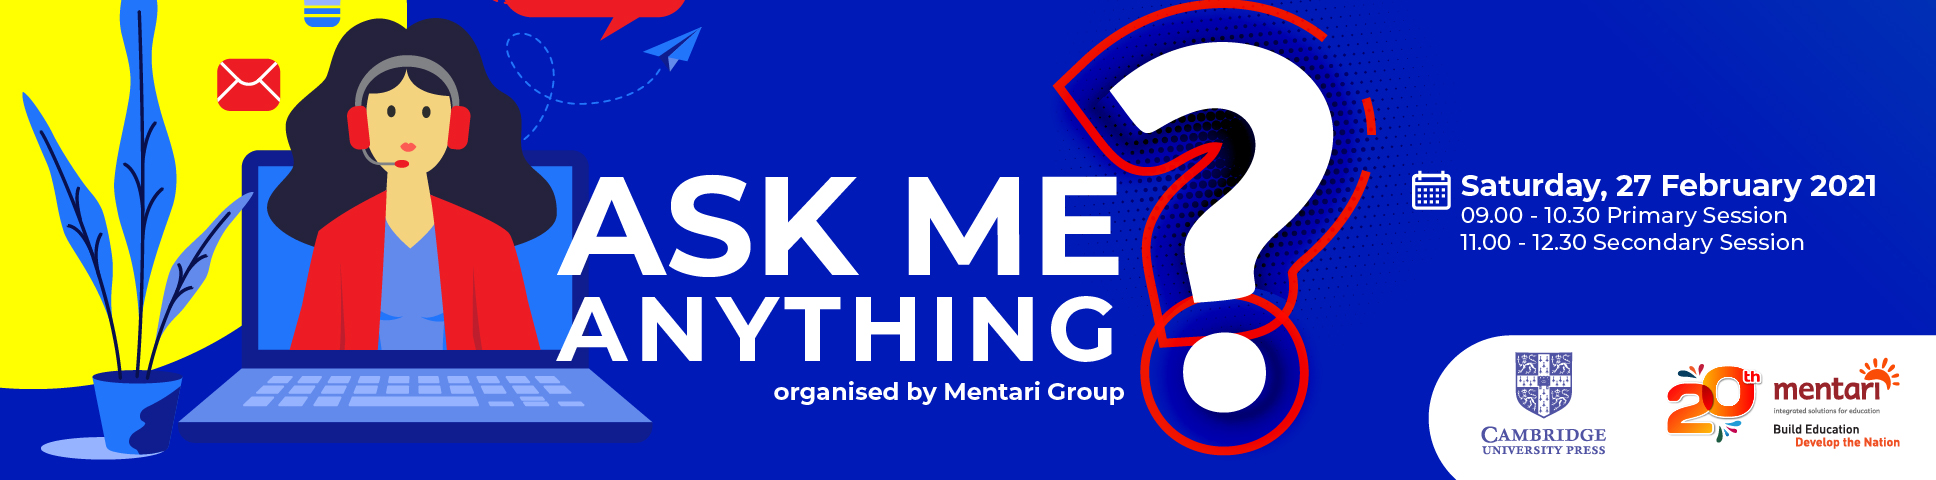 ASK ME ANYTHING - organised by Mentari Group & Cambridge University Press